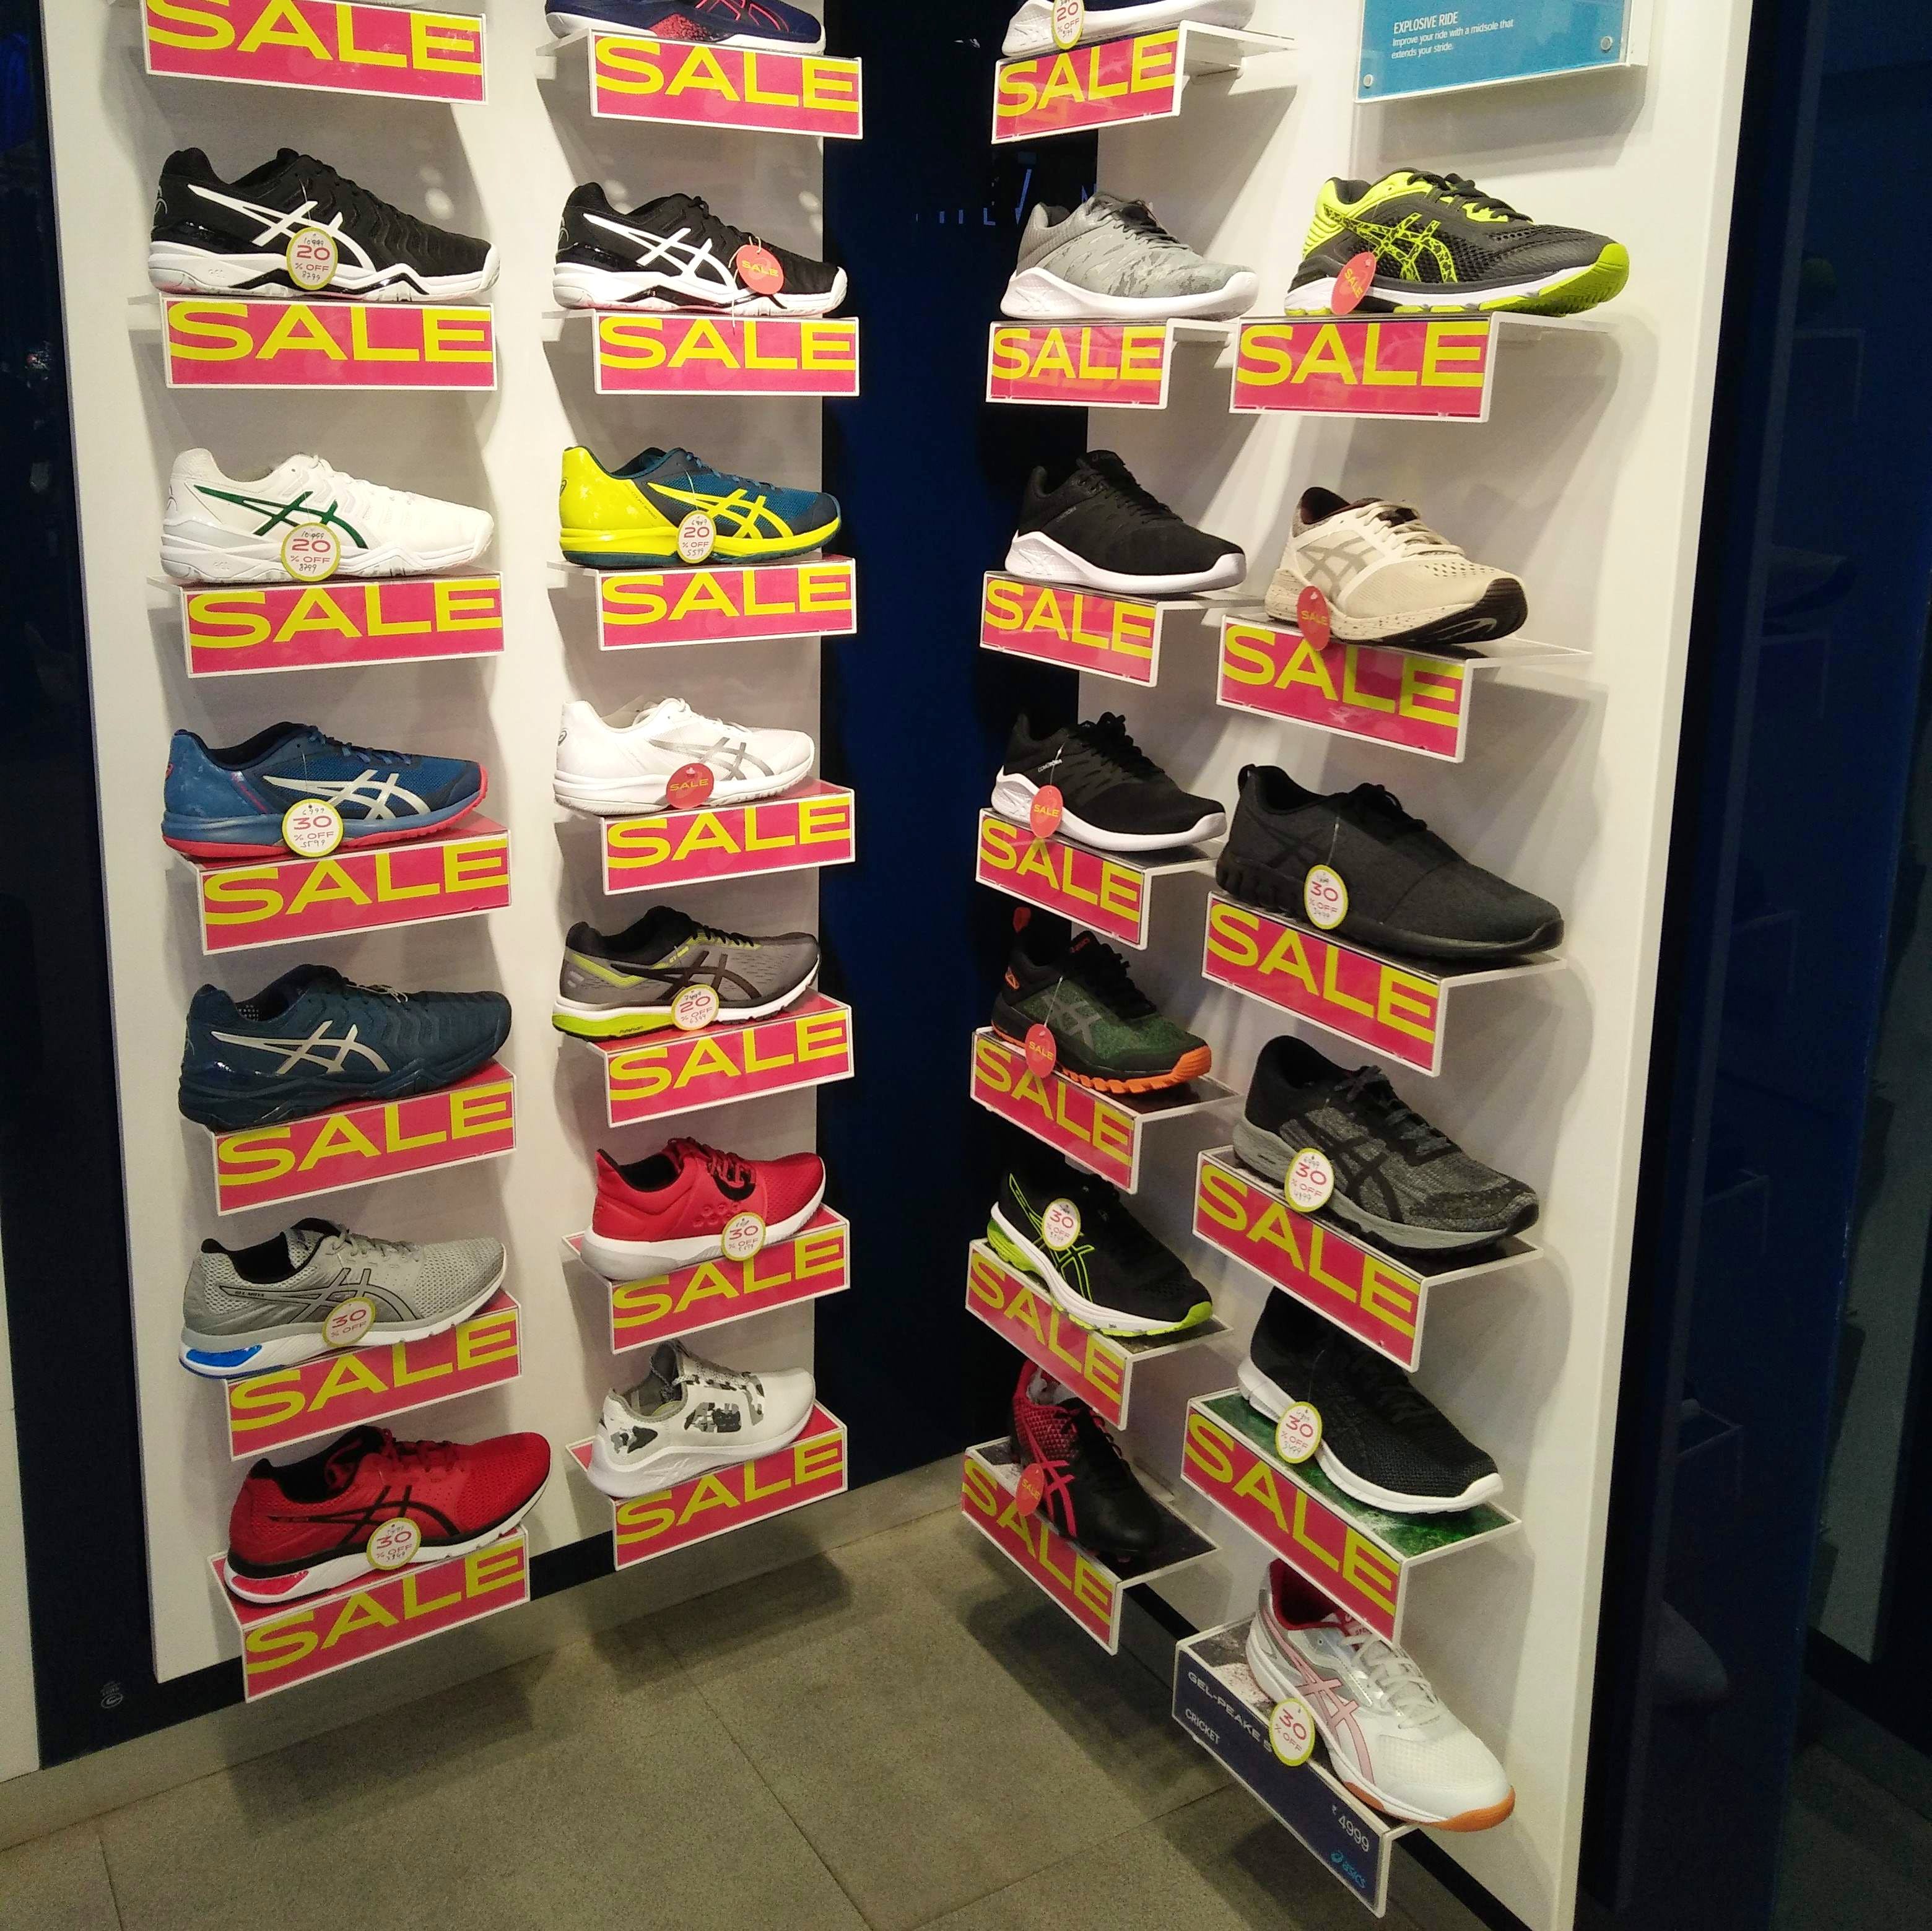 Shelf,Display case,Footwear,Shoe store,Shelving,Room,Furniture,Shoe,Retail,Athletic shoe